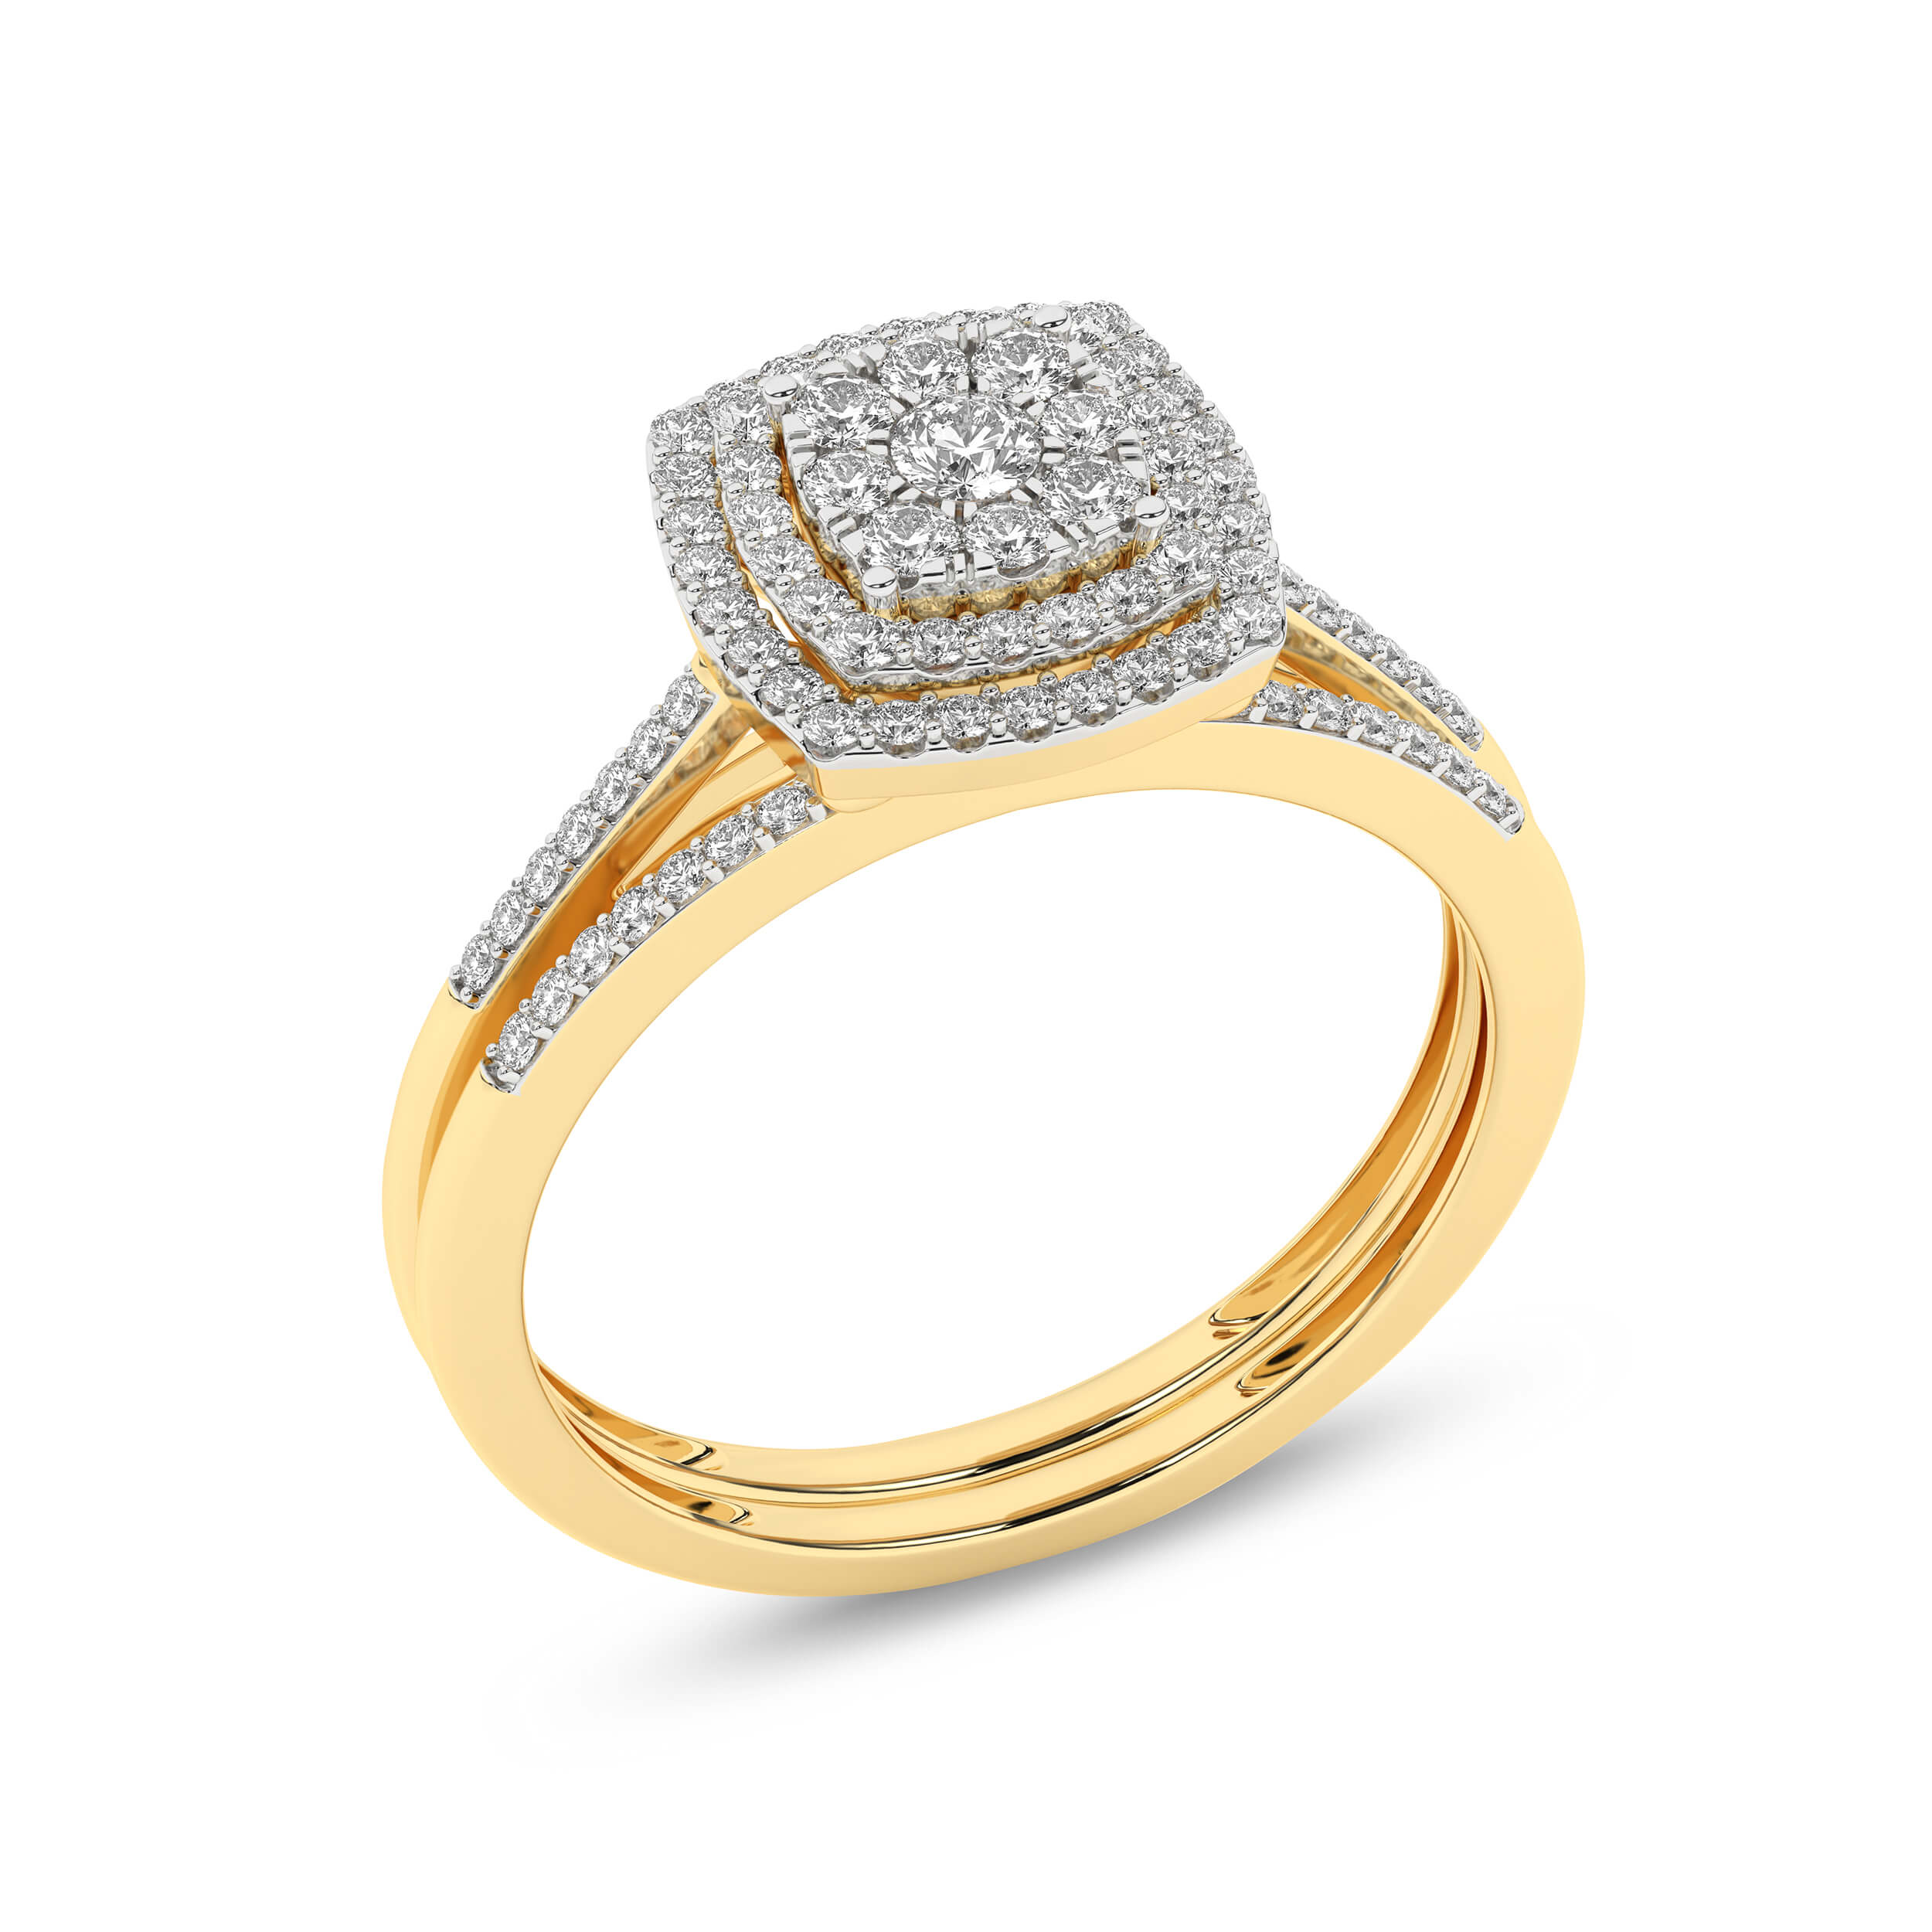 Inel de logodna din Aur Galben 14K cu Diamante 0.33Ct, articol RB15449, previzualizare foto 4